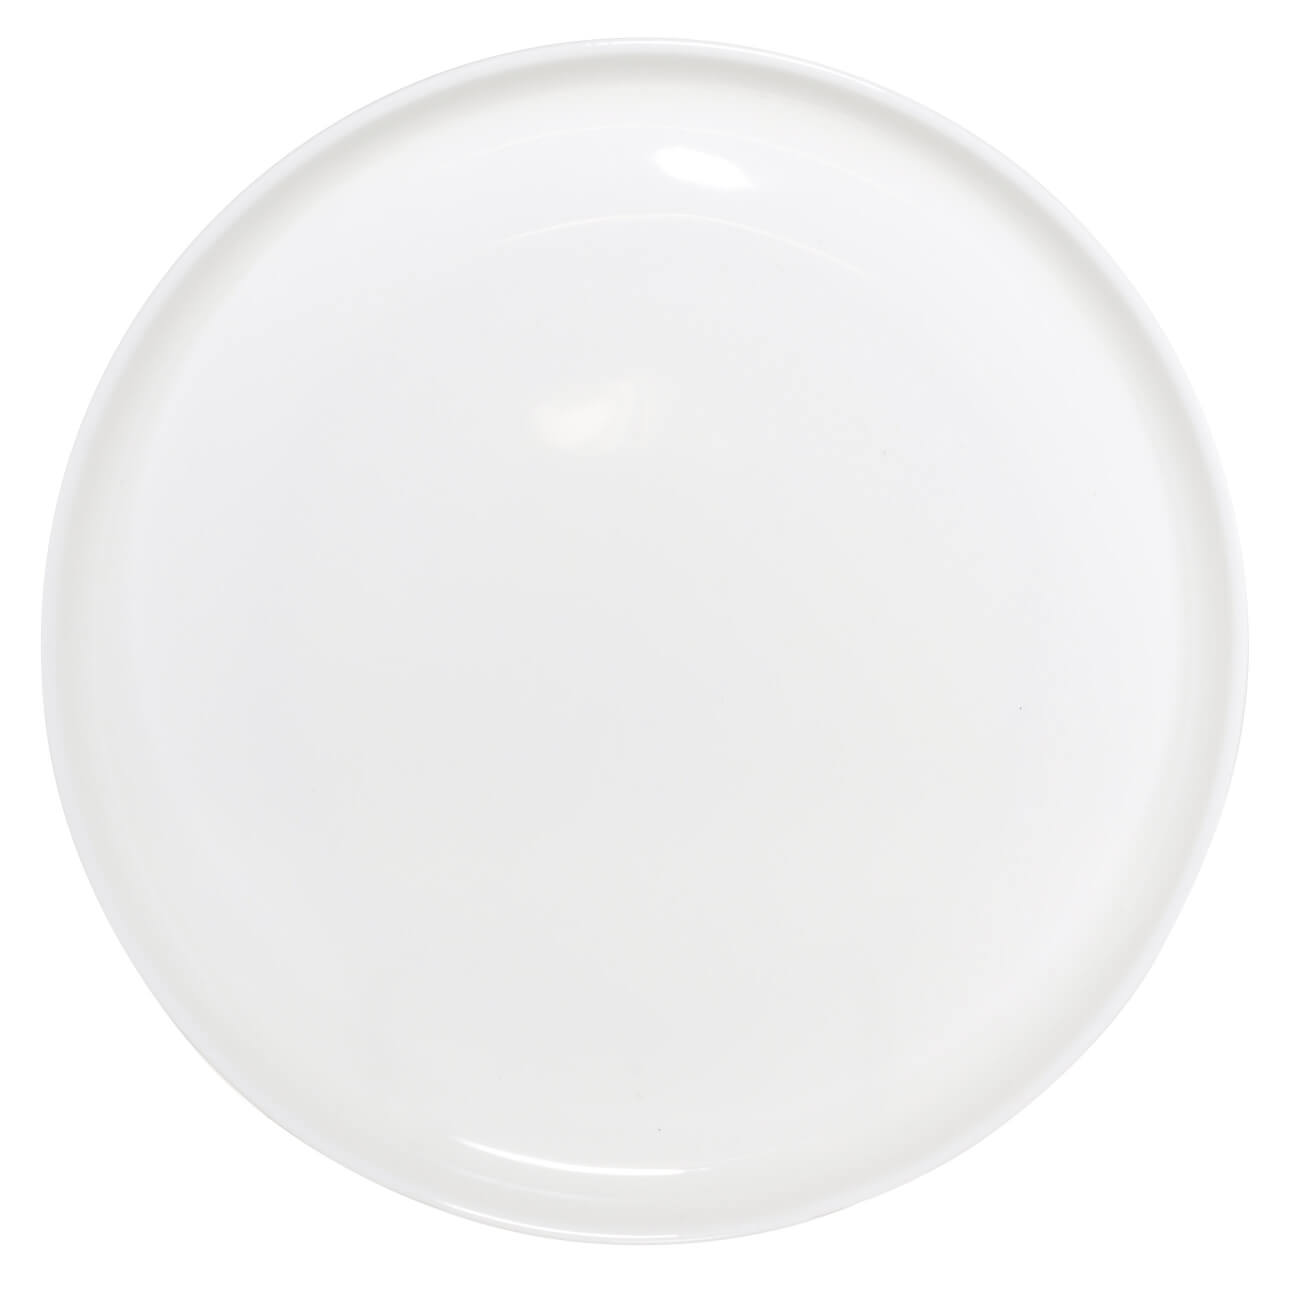 Тарелка обеденная, 26 см, фарфор F, белая, Ideal white тарелка обеденная 26 см фарфор f белая ideal white